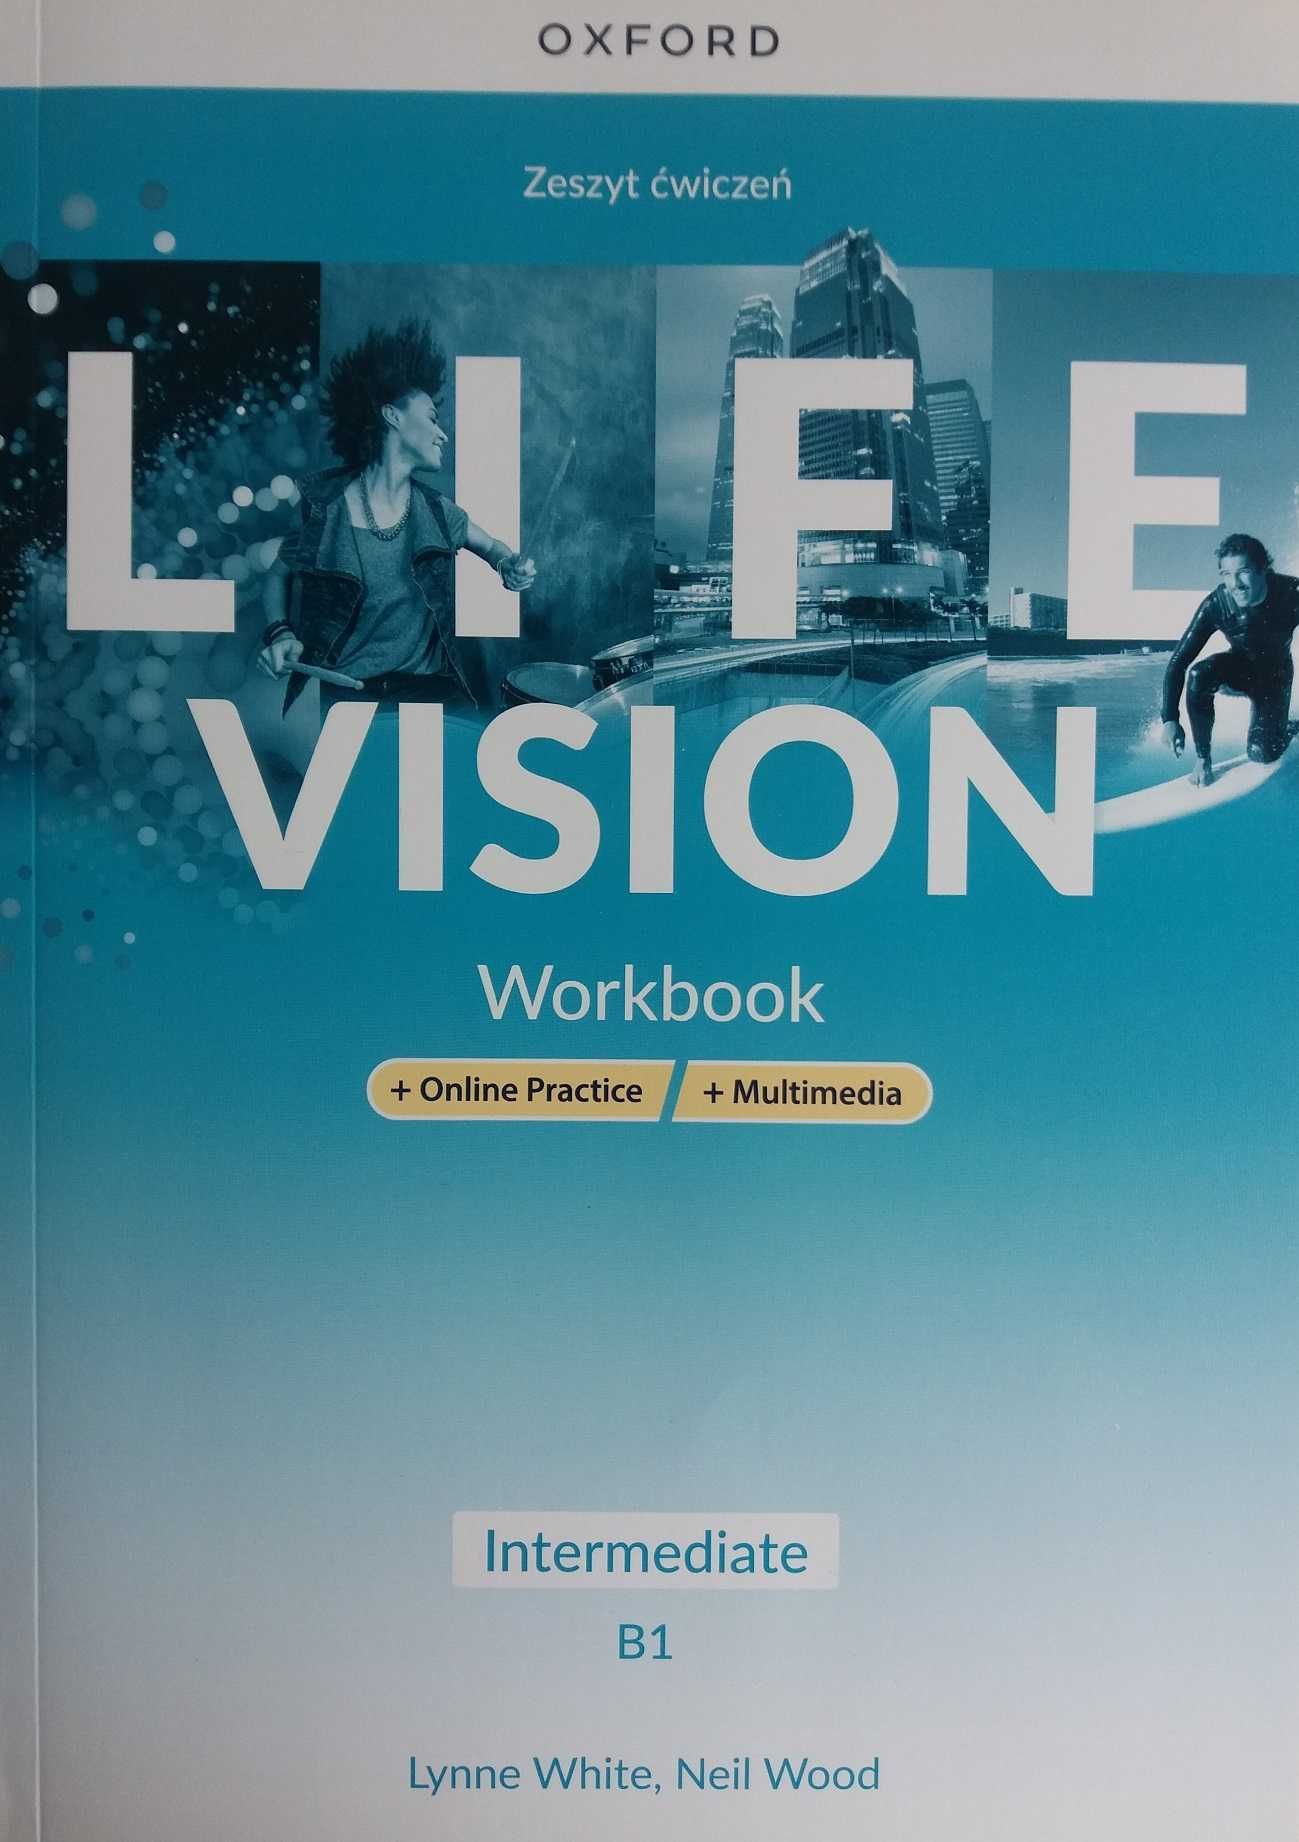 Life Vision Workbook Intermediate B1 Oxford